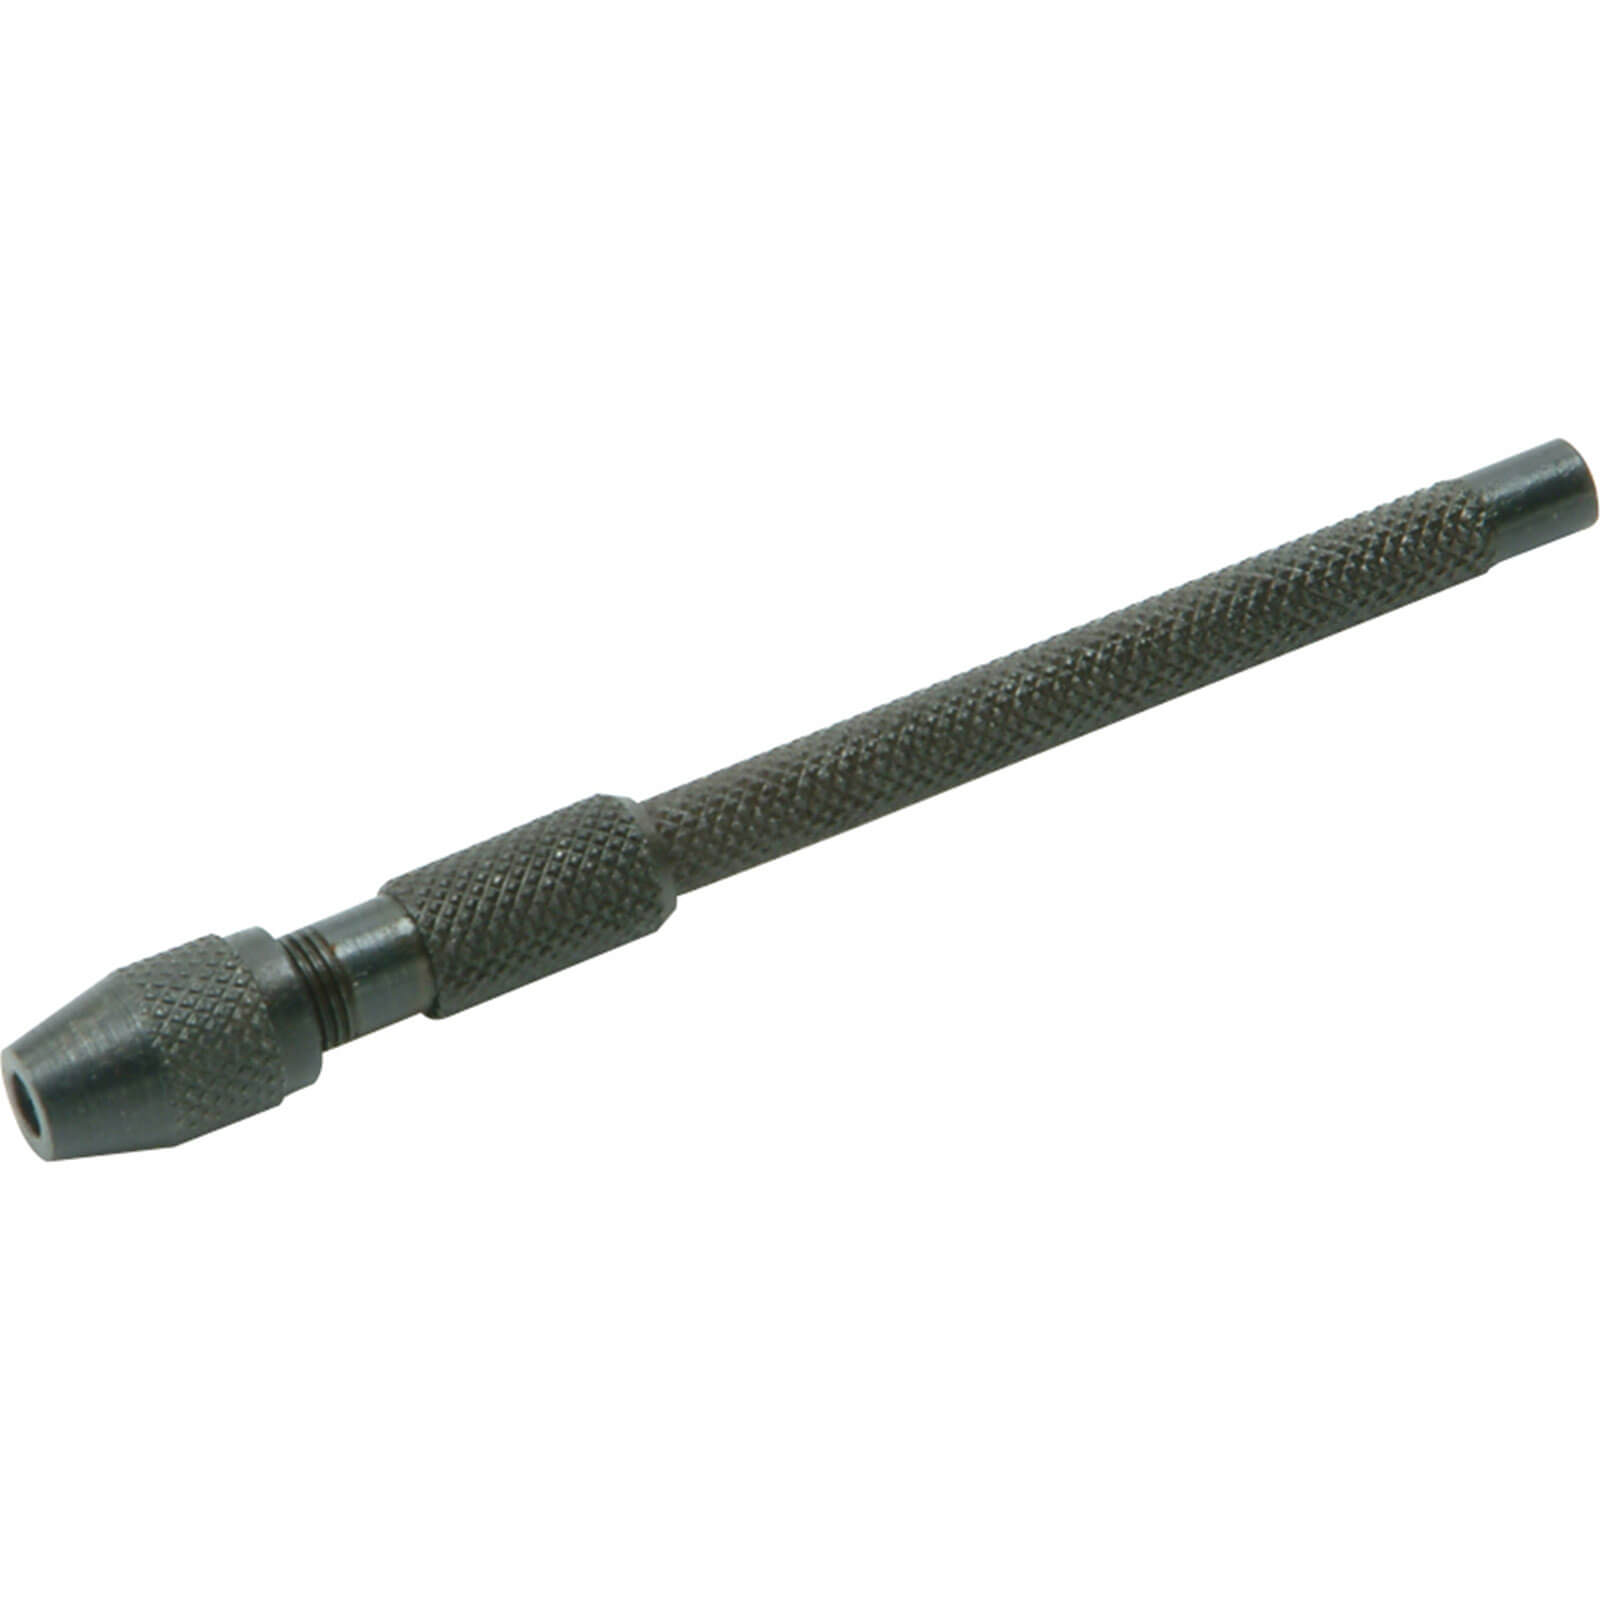 Faithfull Pin Vice - Size 1 0-1mm Cap